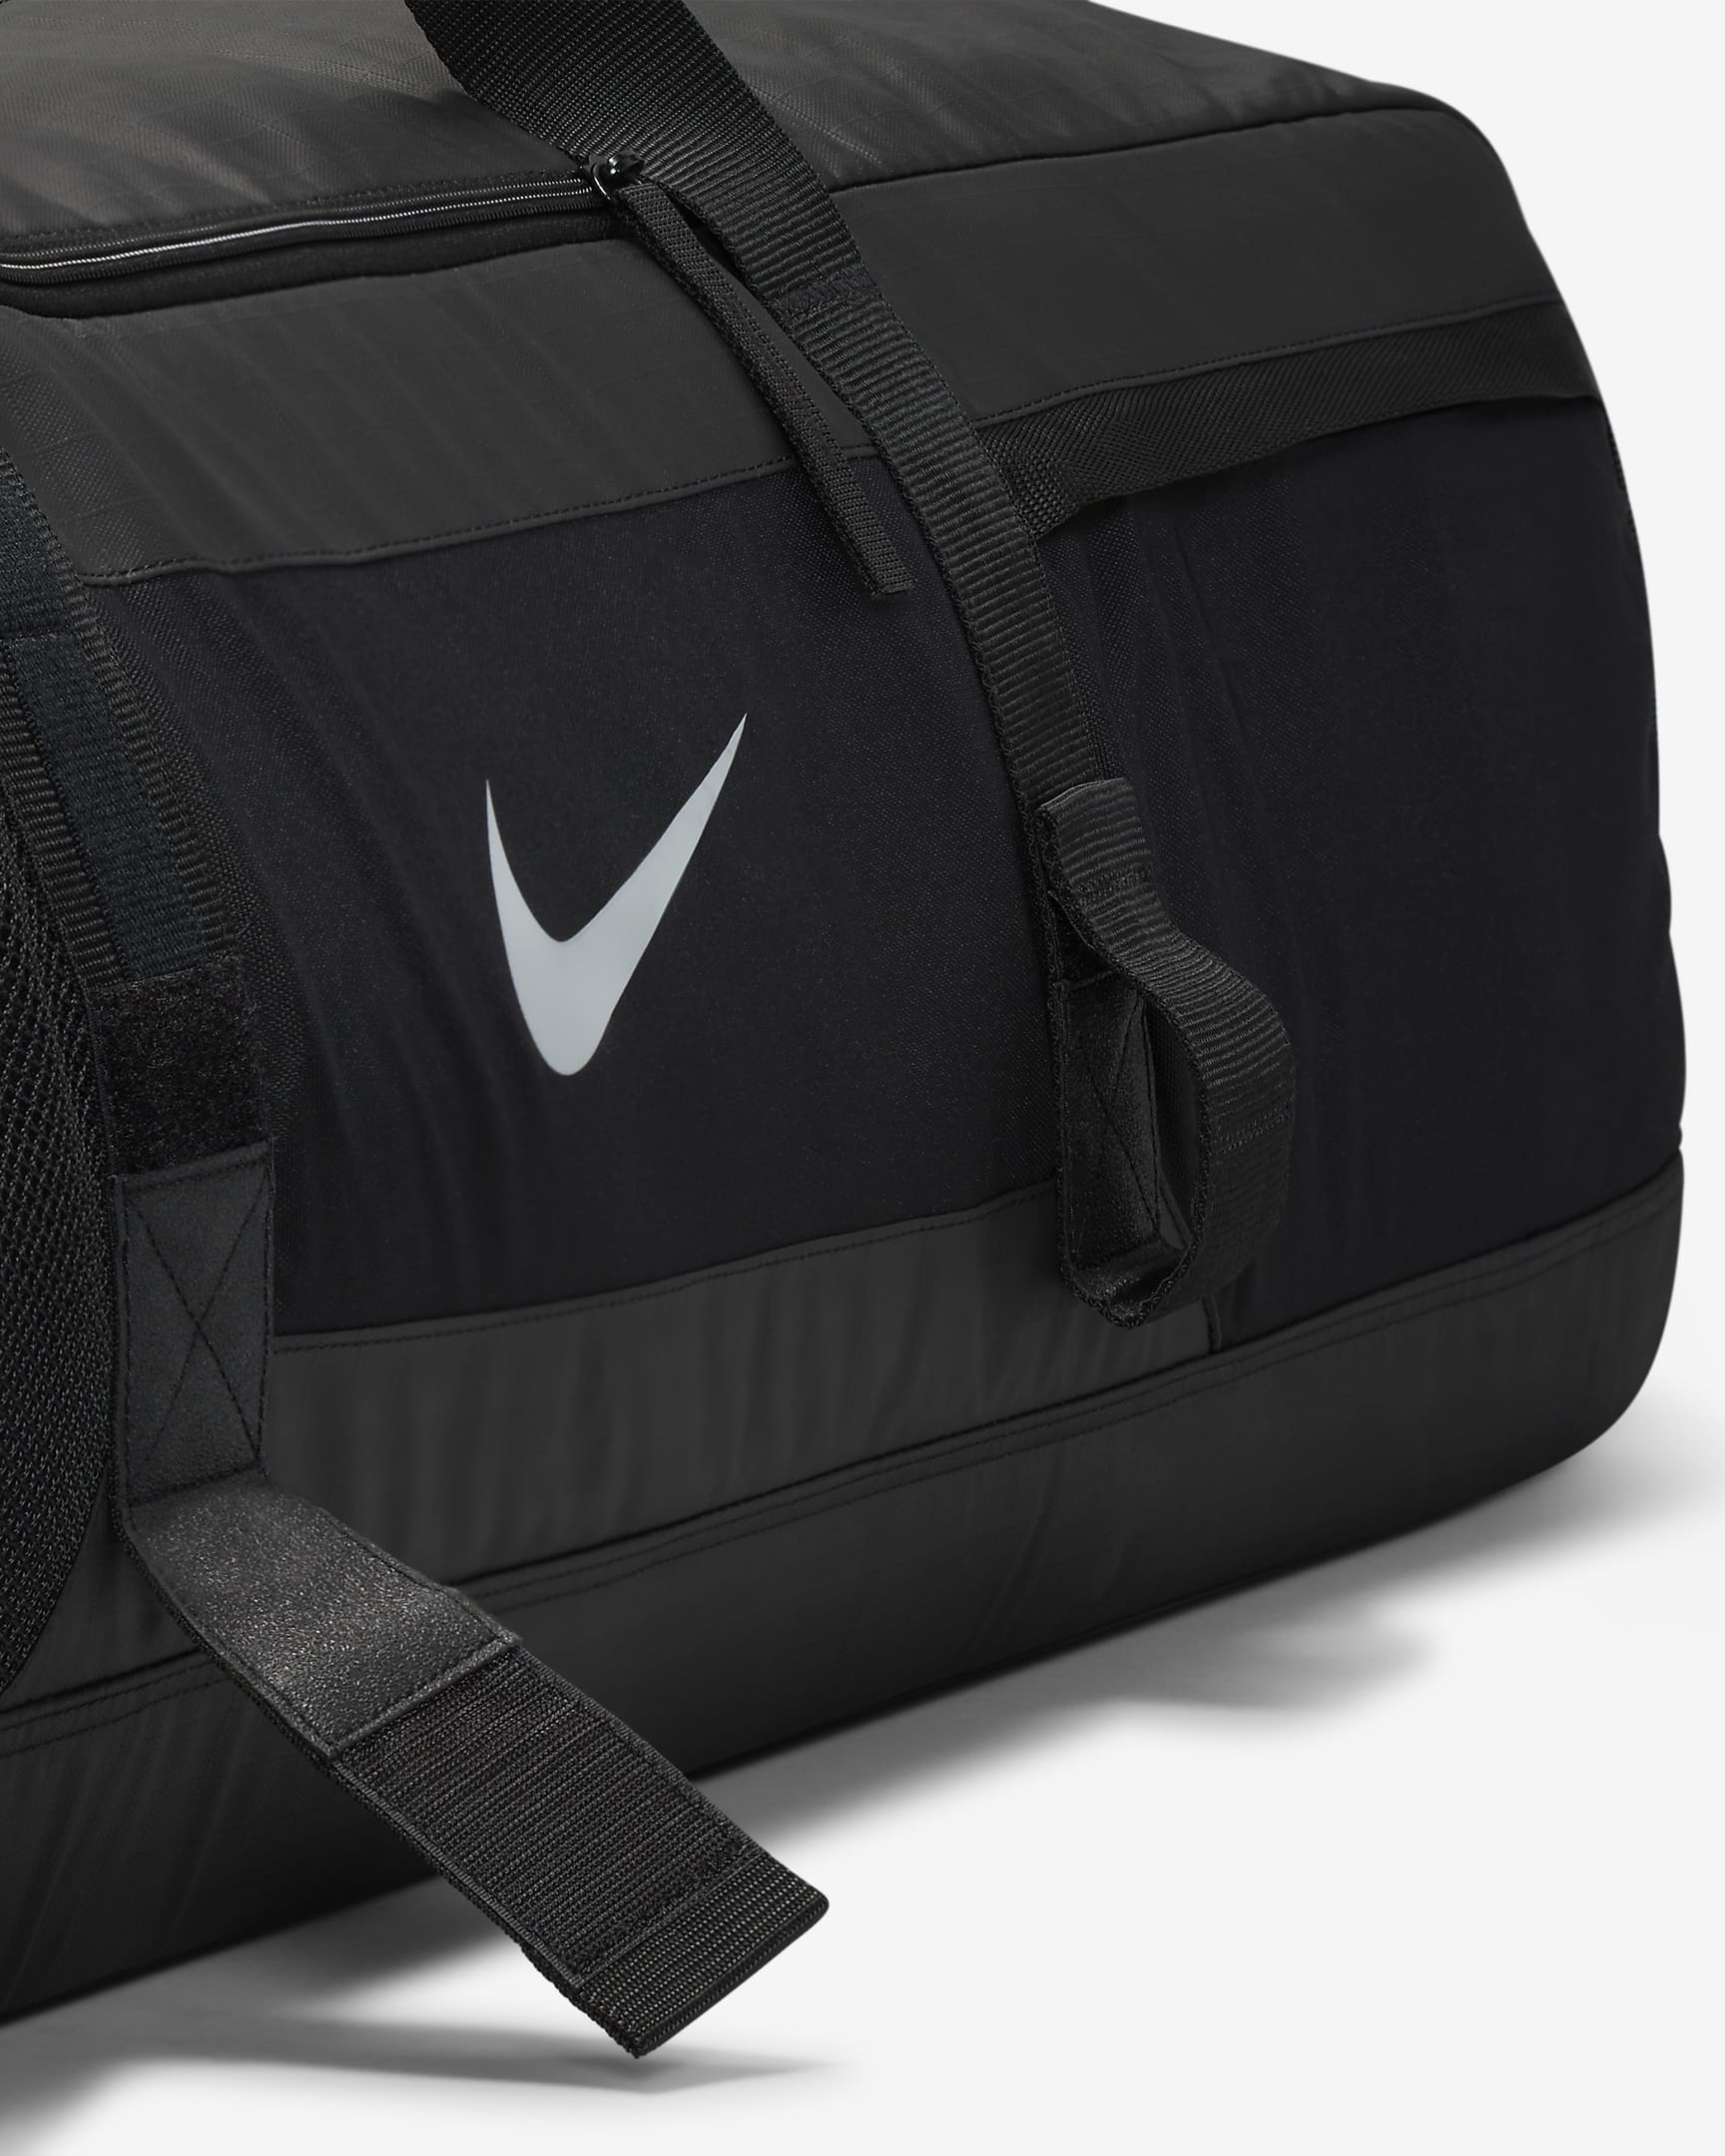 Nike Shield Lacrosse Duffel Bag (112L). Nike.com